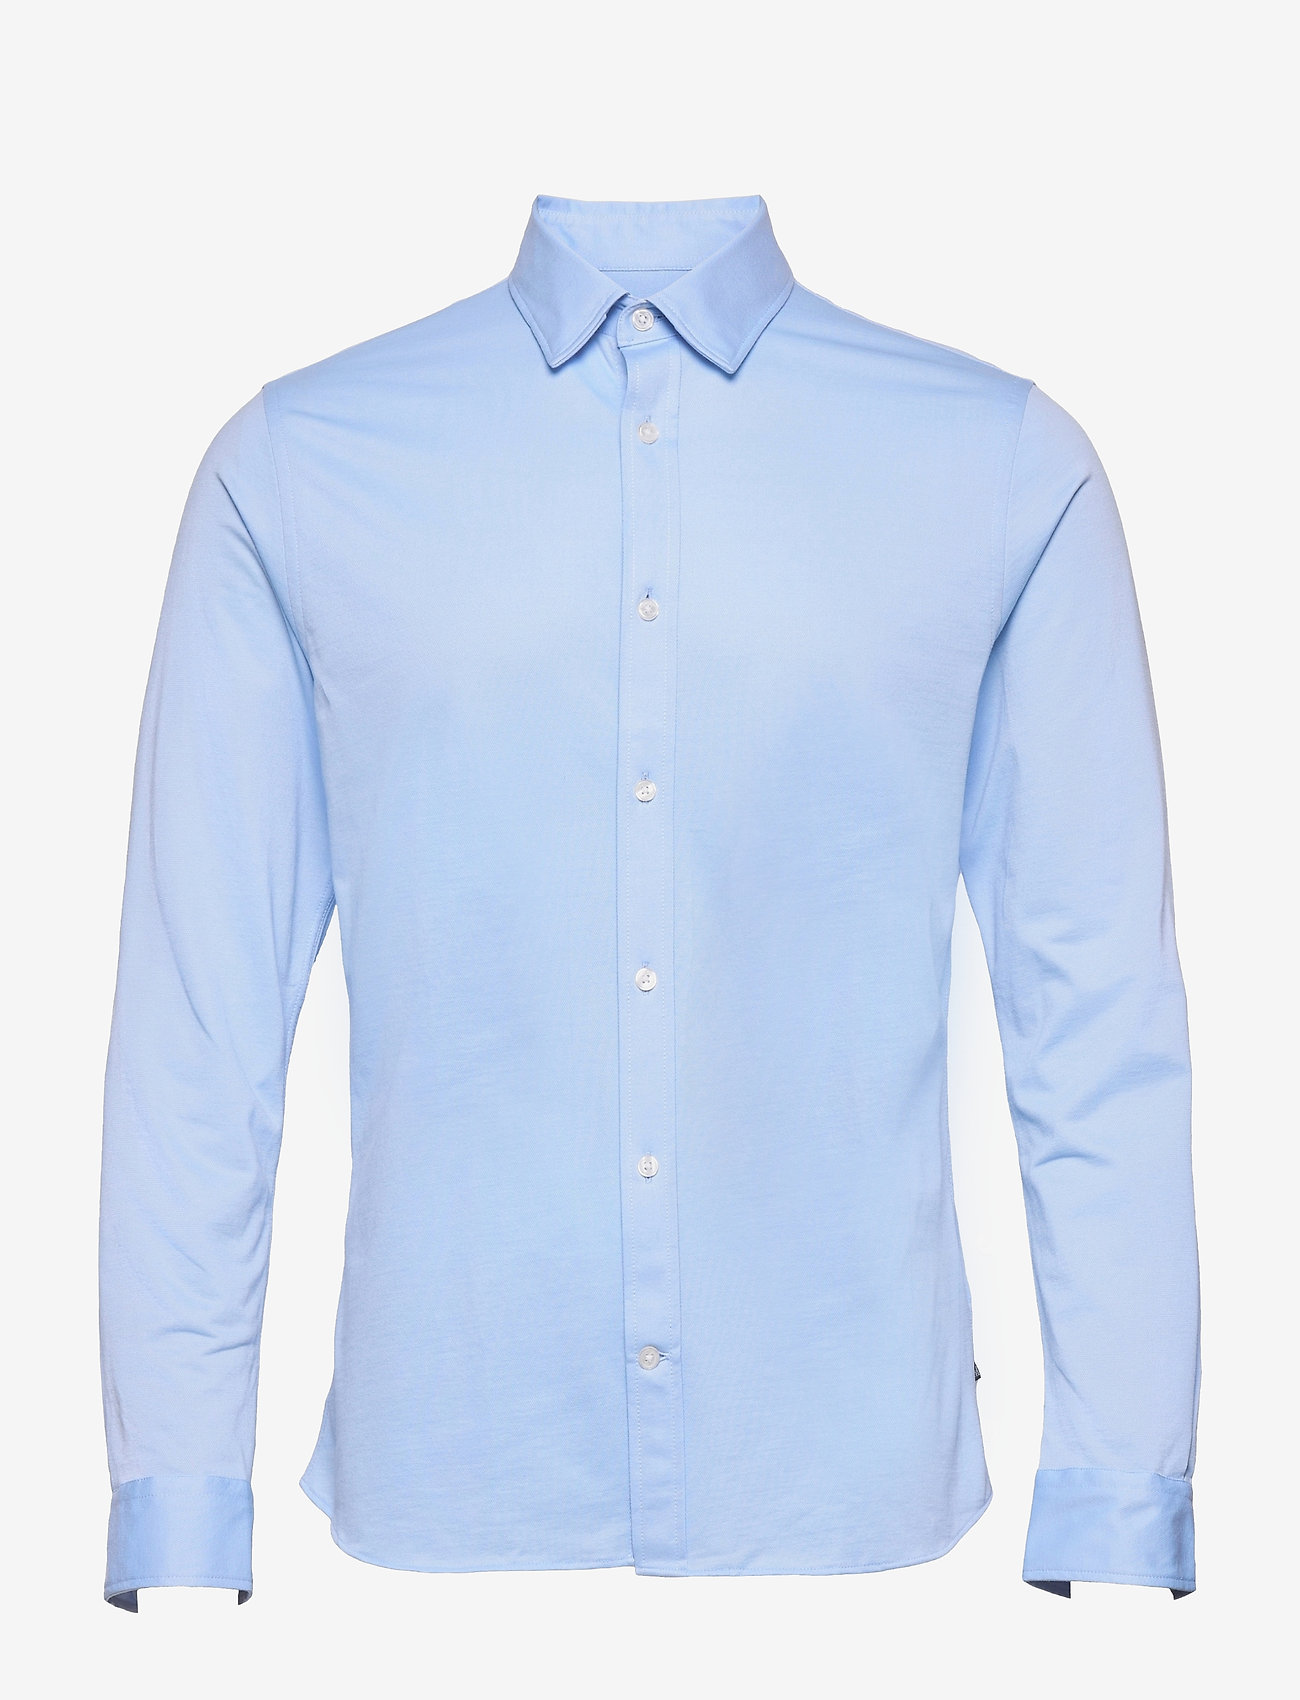 Matinique - MAtrostol BU - basic shirts - chambray blue - 0